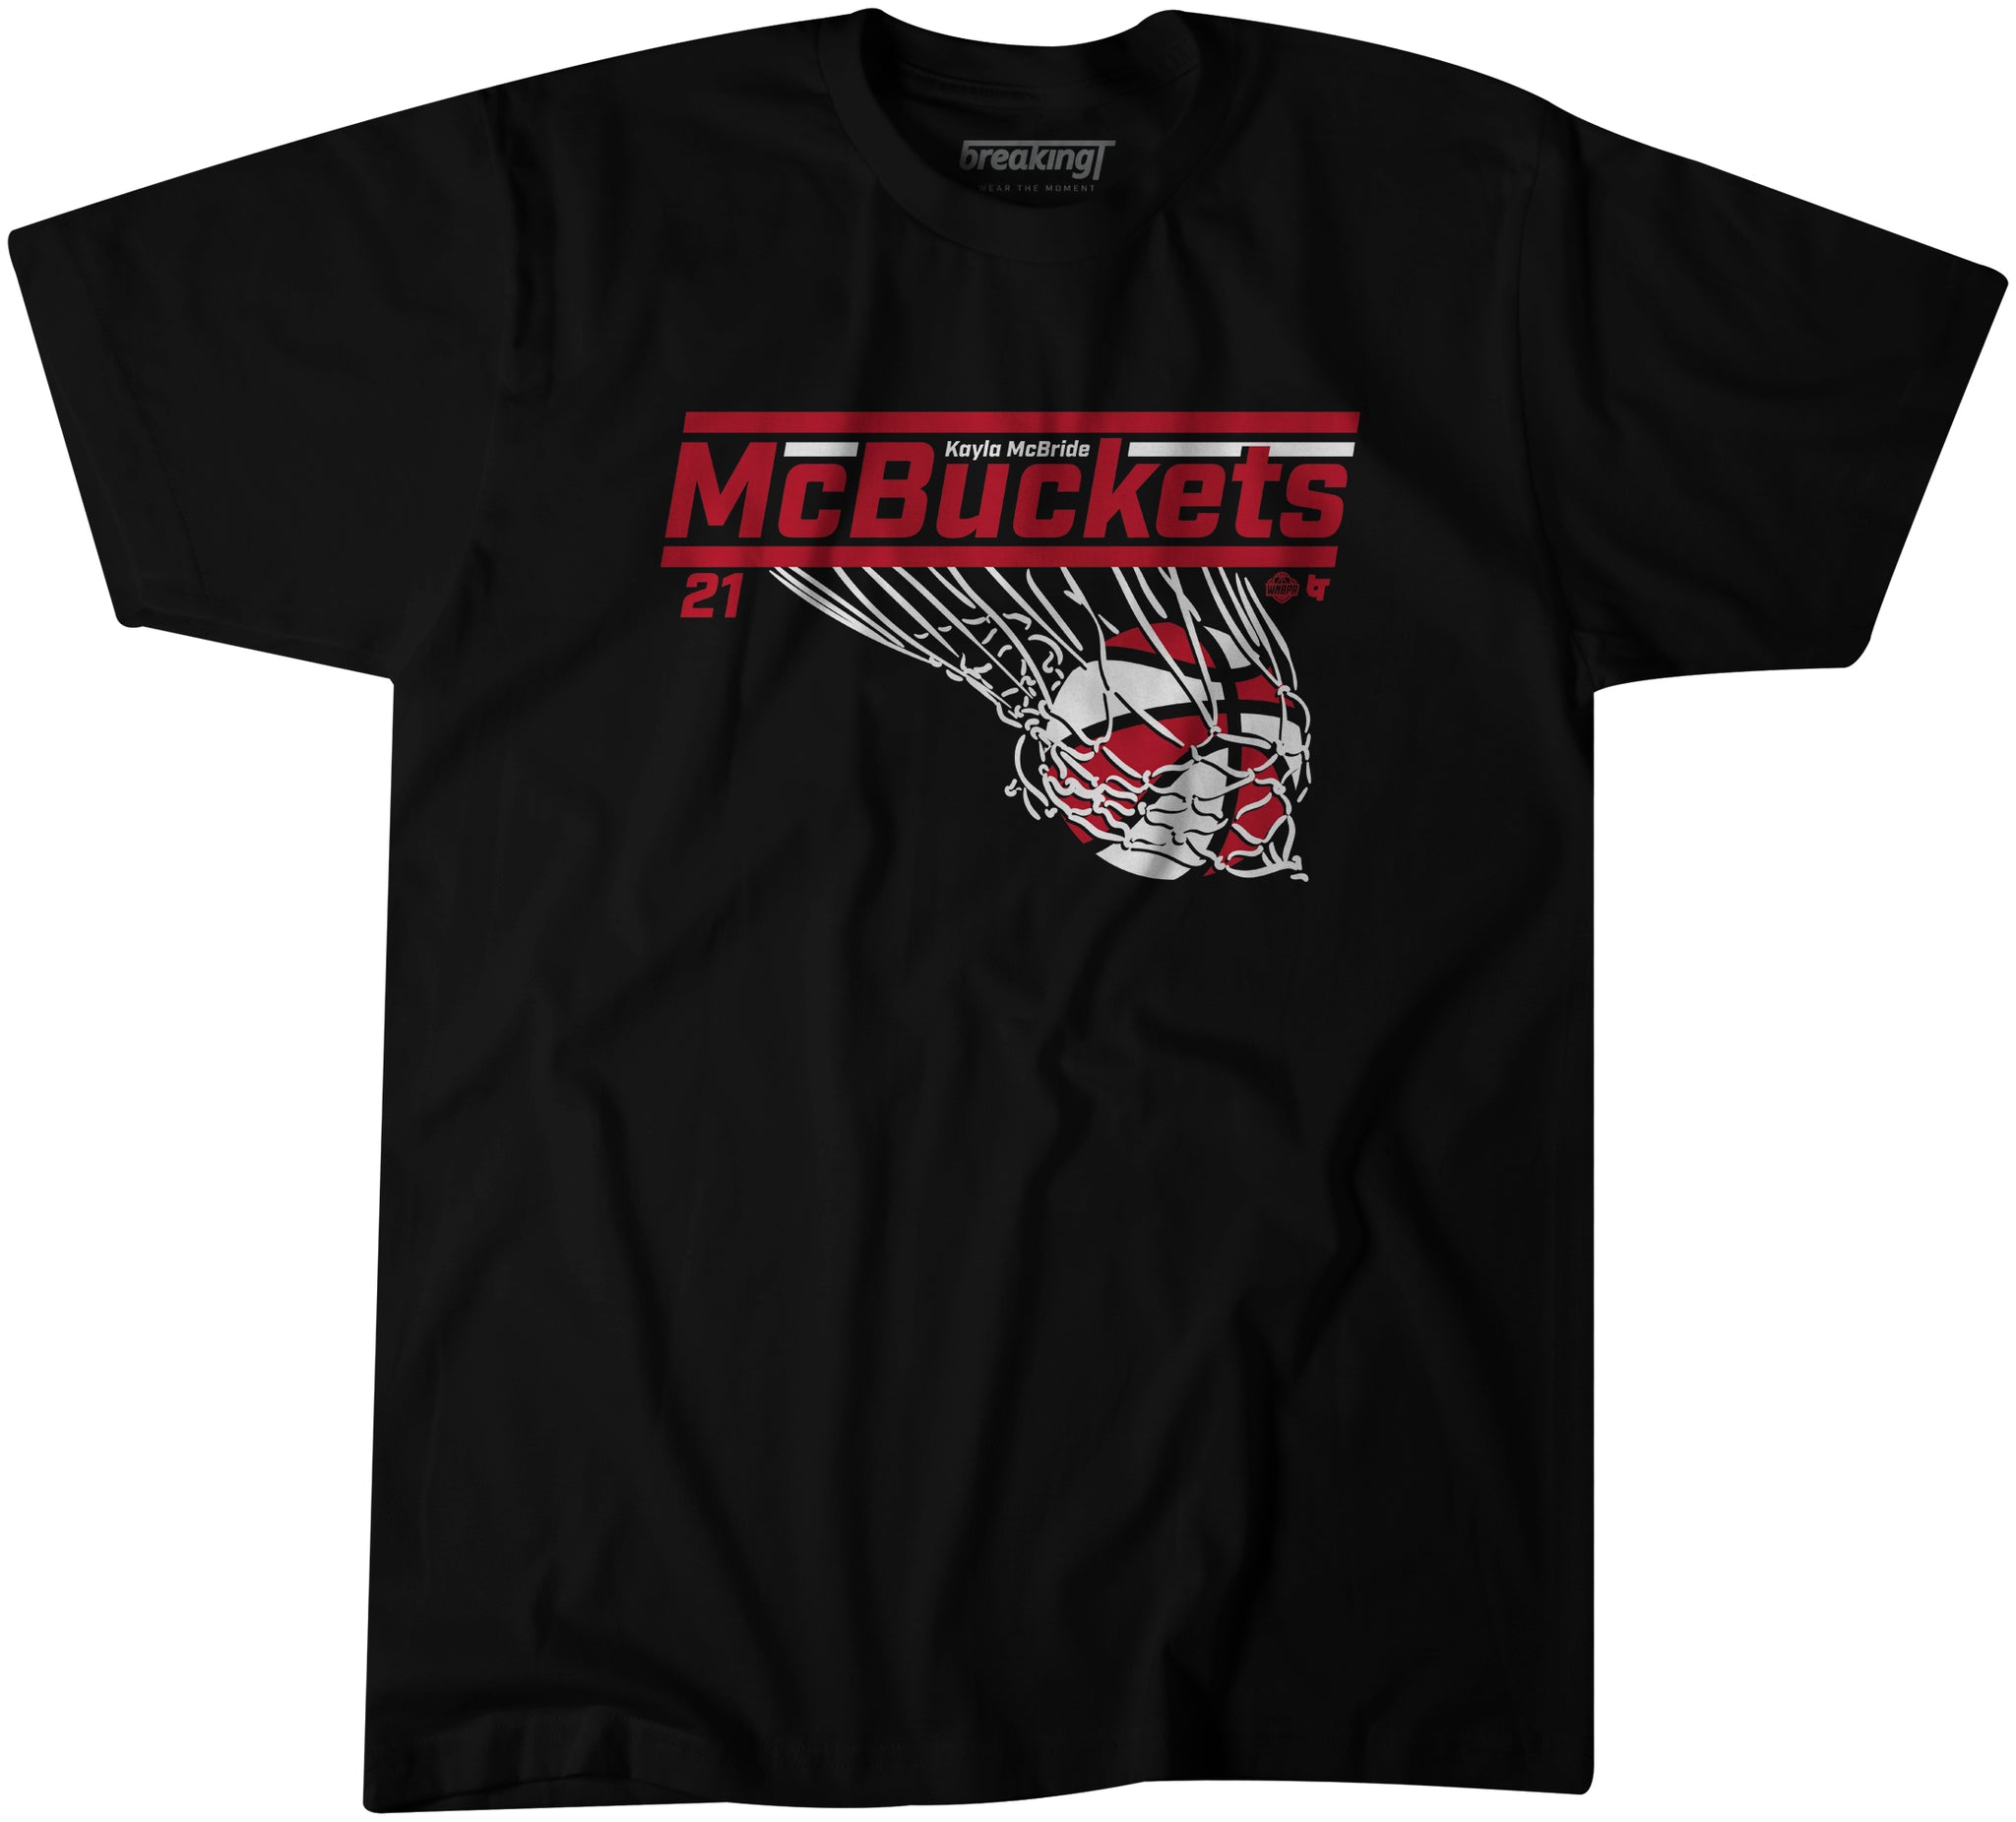 Kayla McBride Shirt, McBuckets - BreakingT